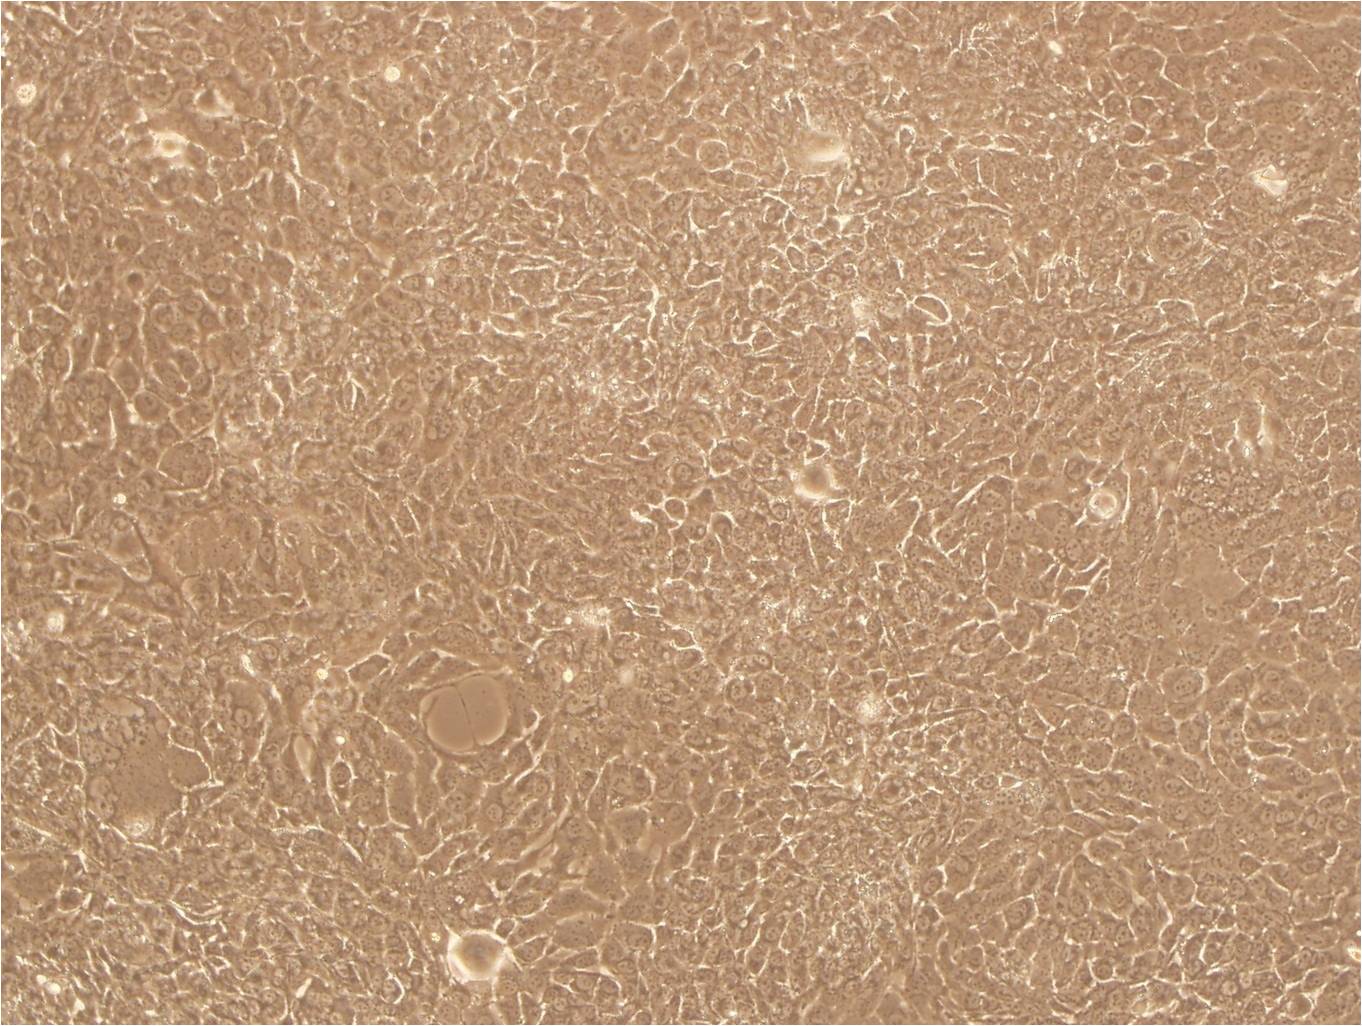 BT Epithelial Cell|新生牛鼻甲传代细胞(有STR鉴定),BT Epithelial Cell